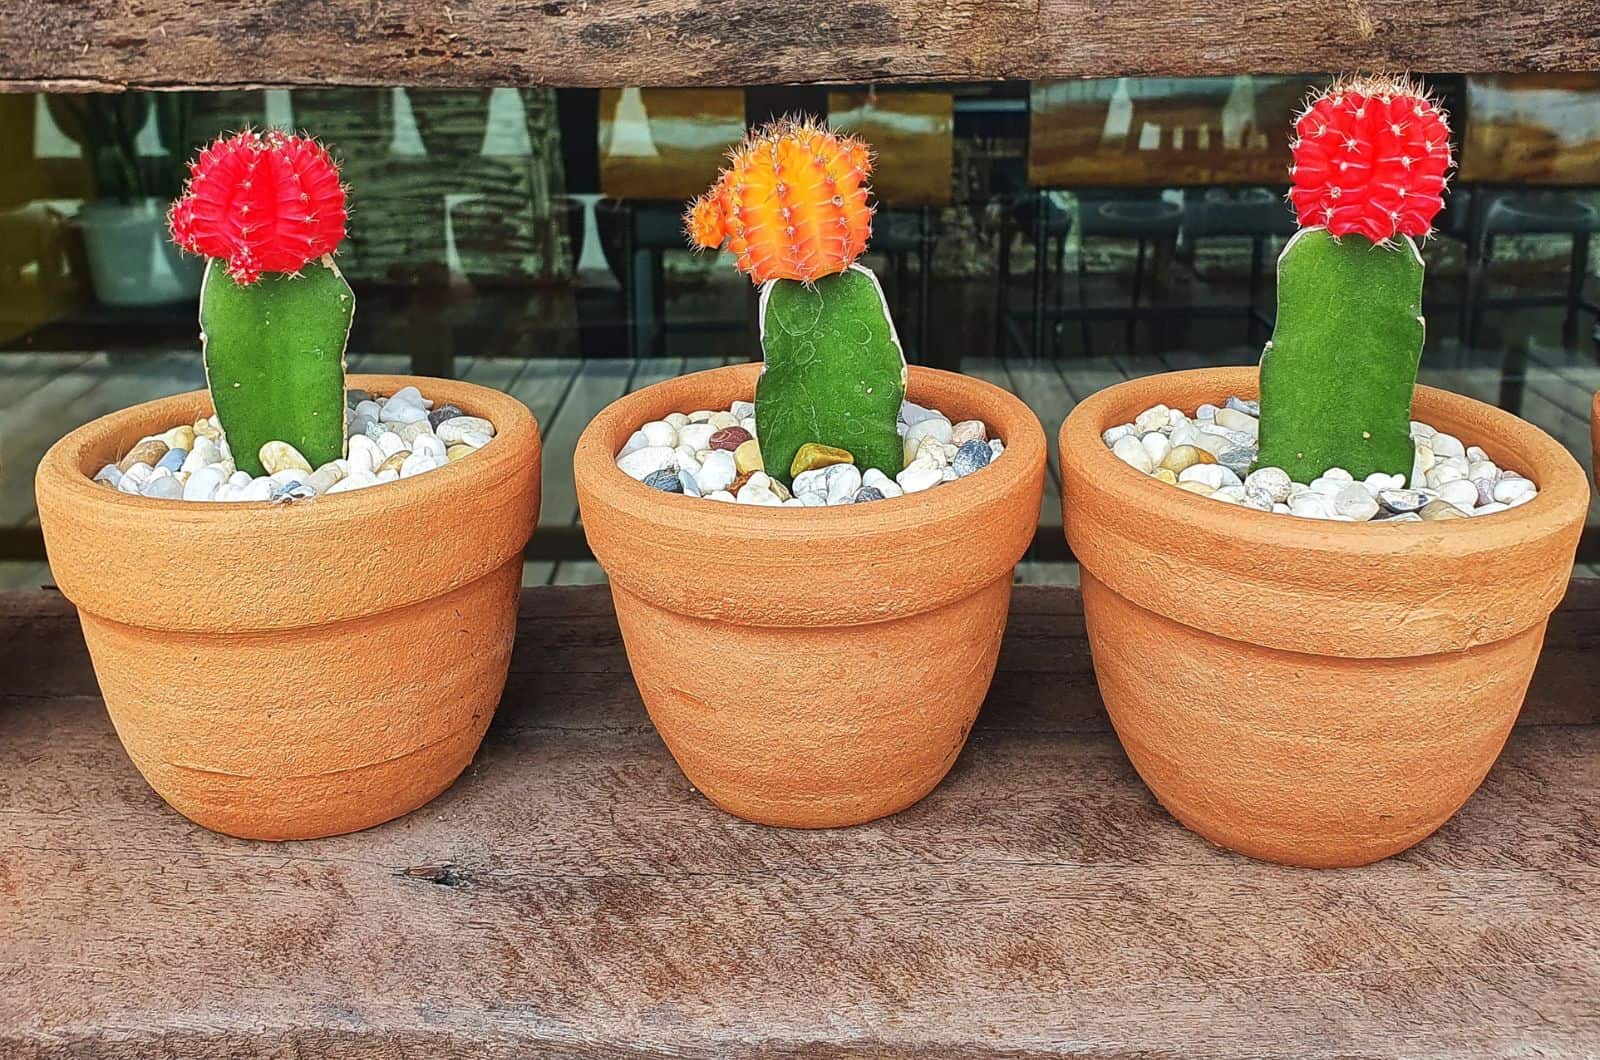 three moon cactus plants in pots